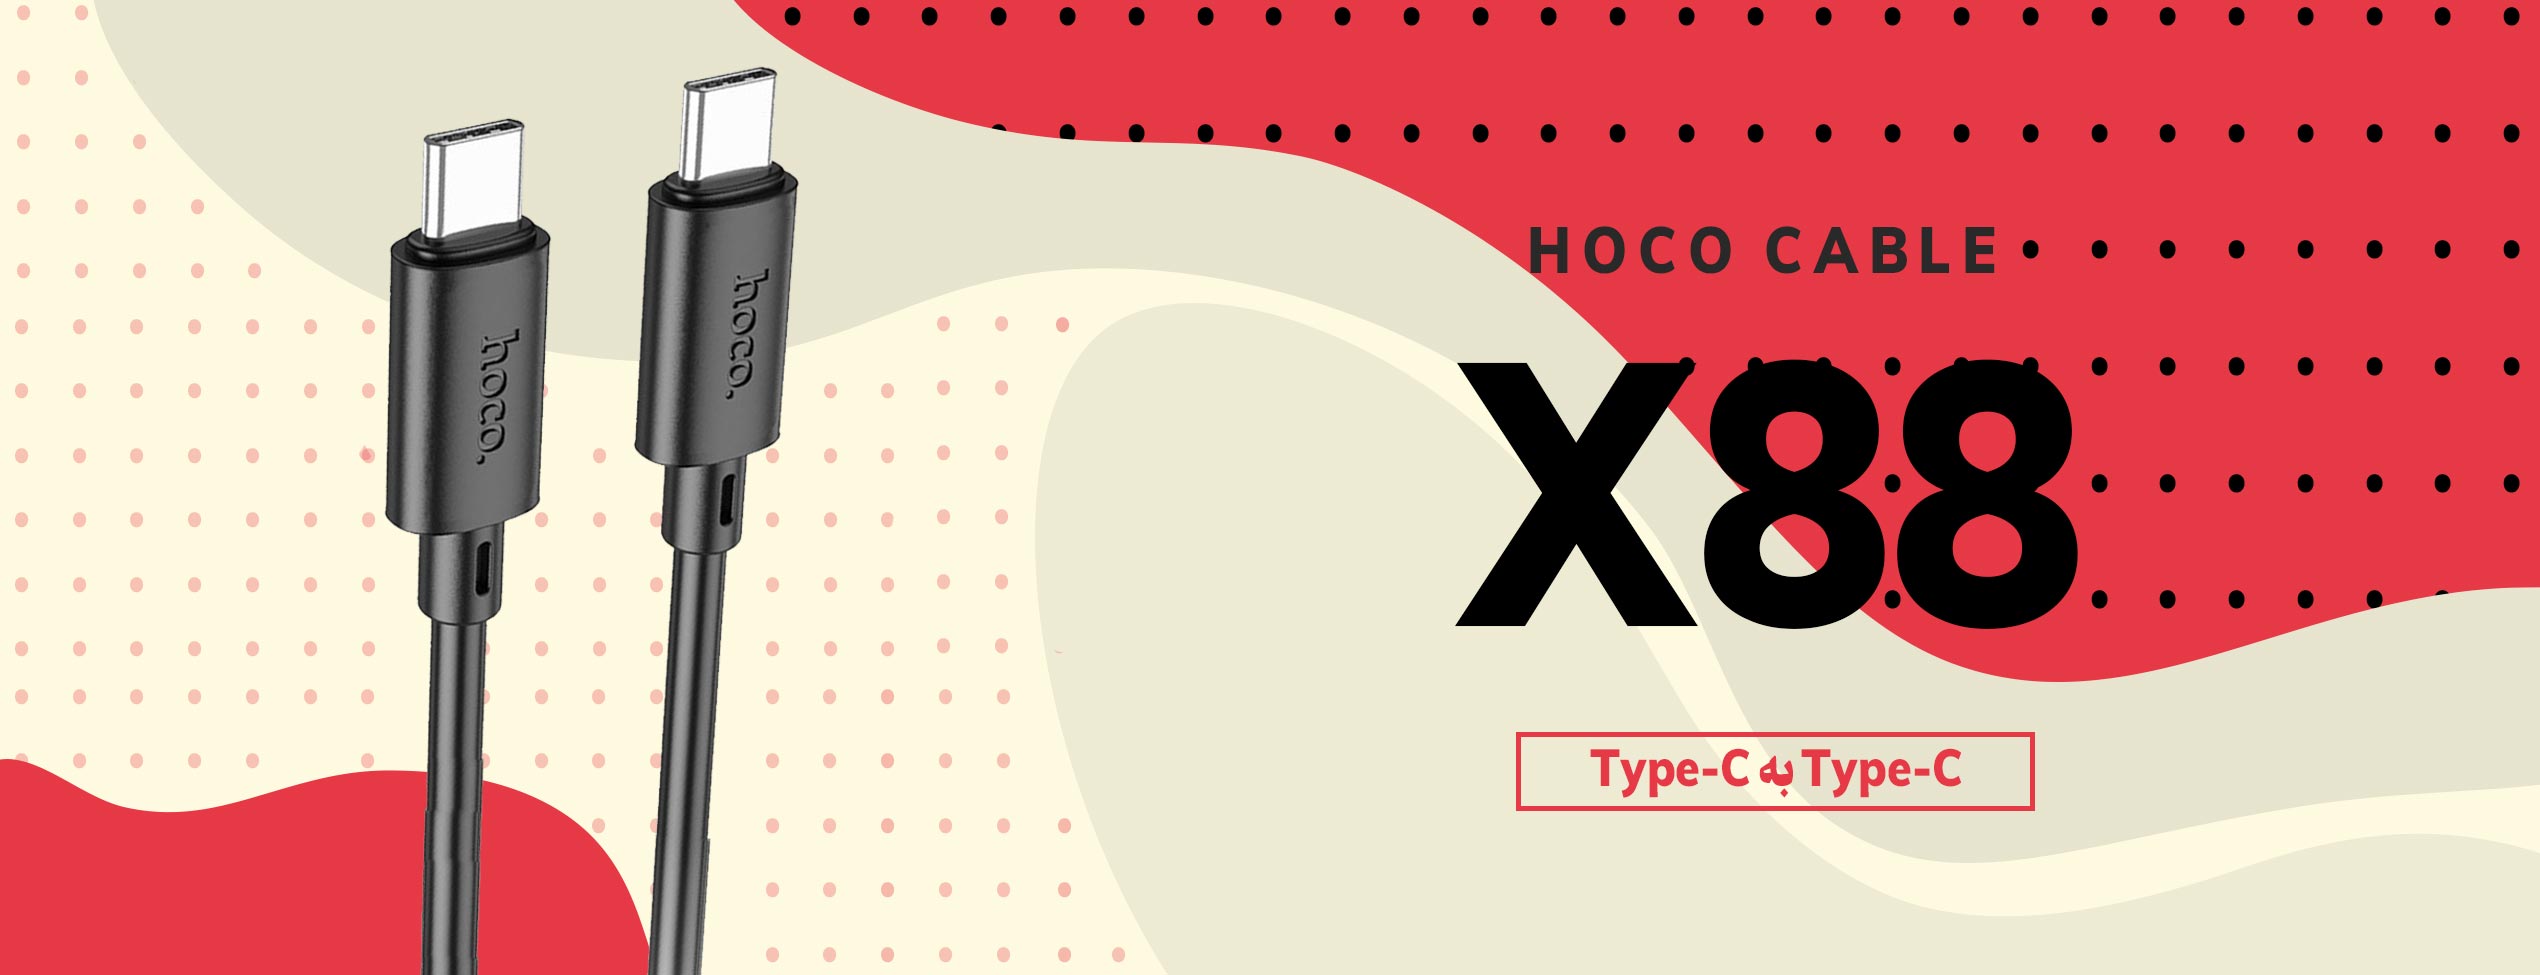 کابل شارژ موبایل Type-C به Type-C هوکو Hoco X88